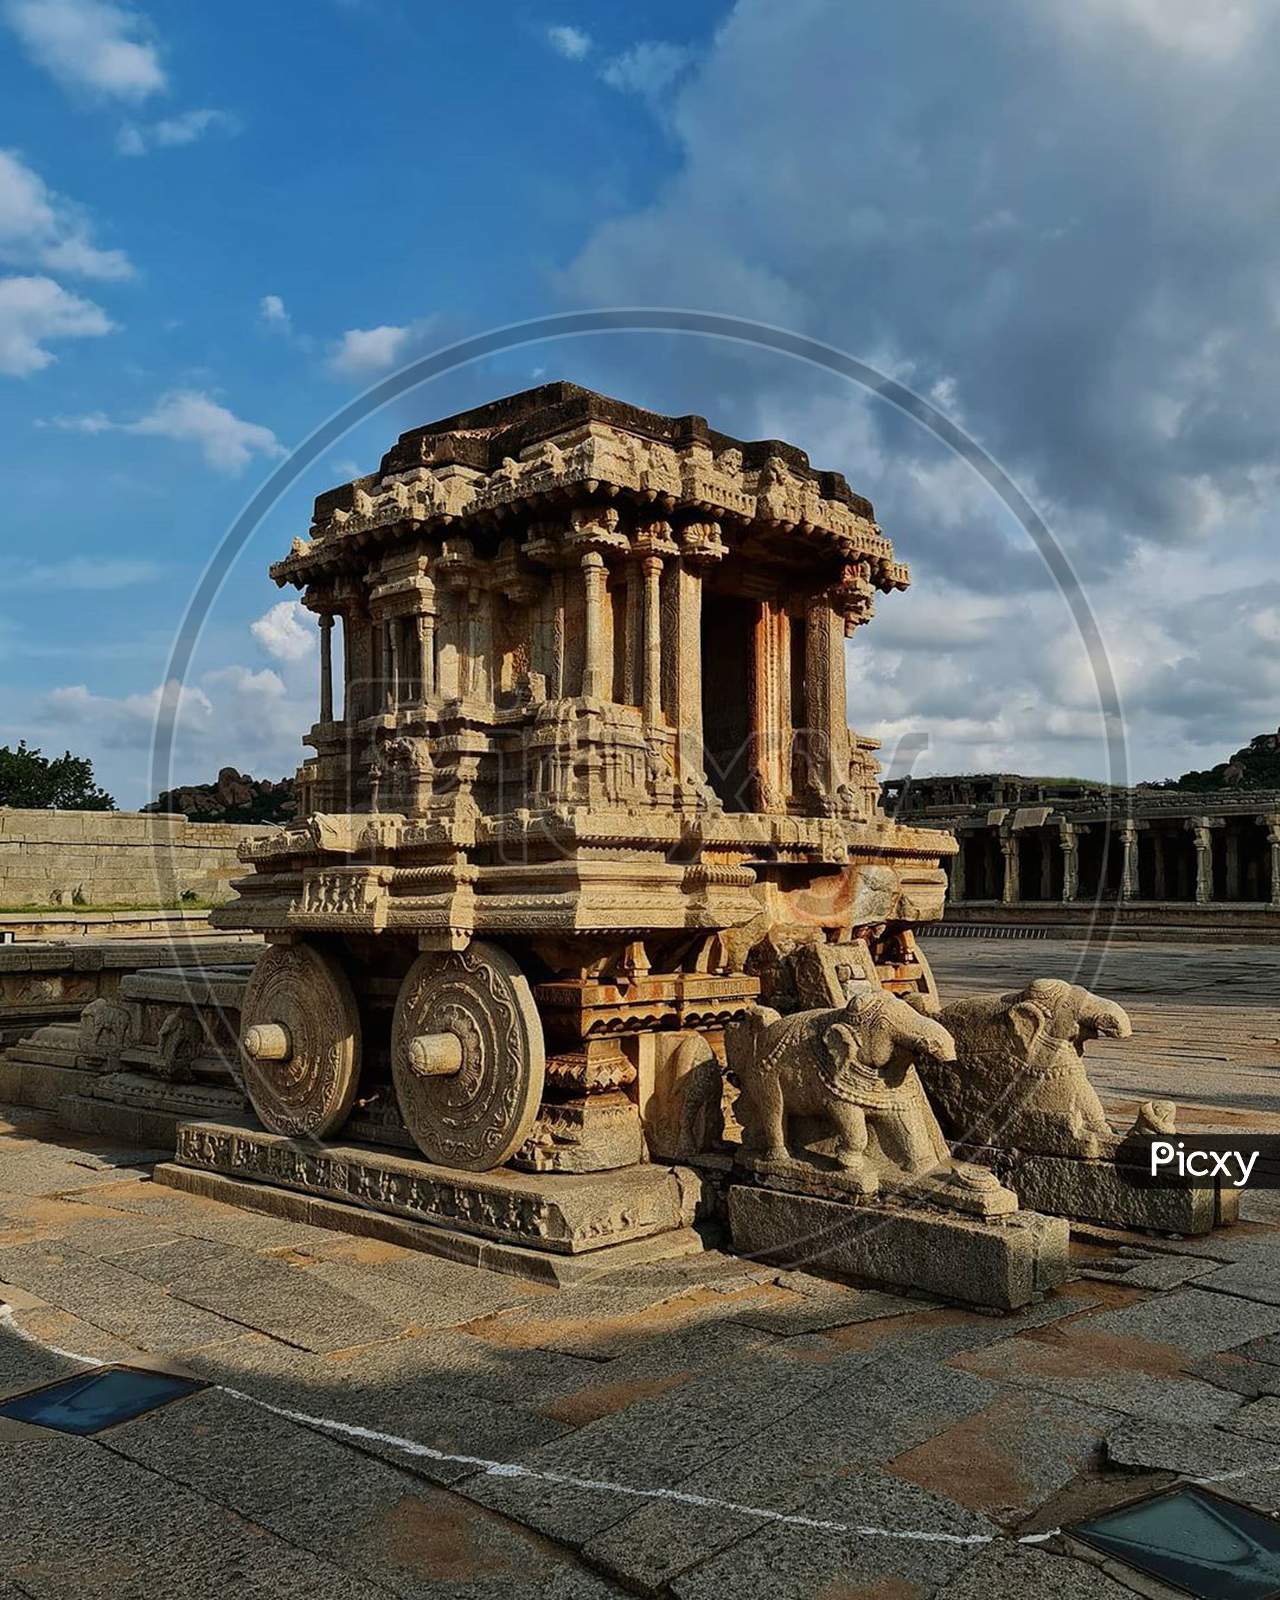 Historic temple on wheels